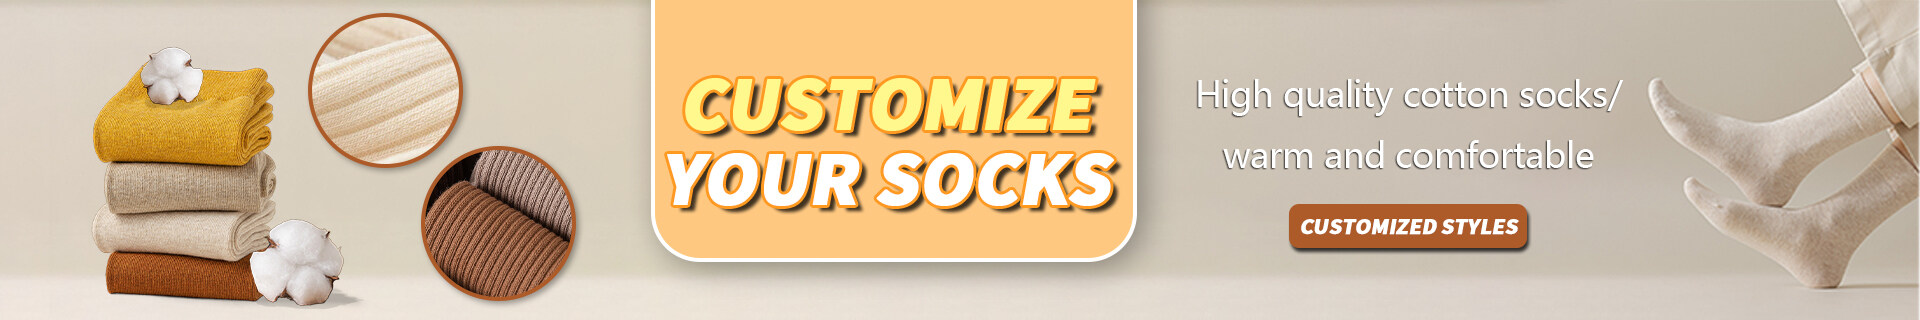 compression cycling socks, oem cycling compression socks, odm cycling compression socks